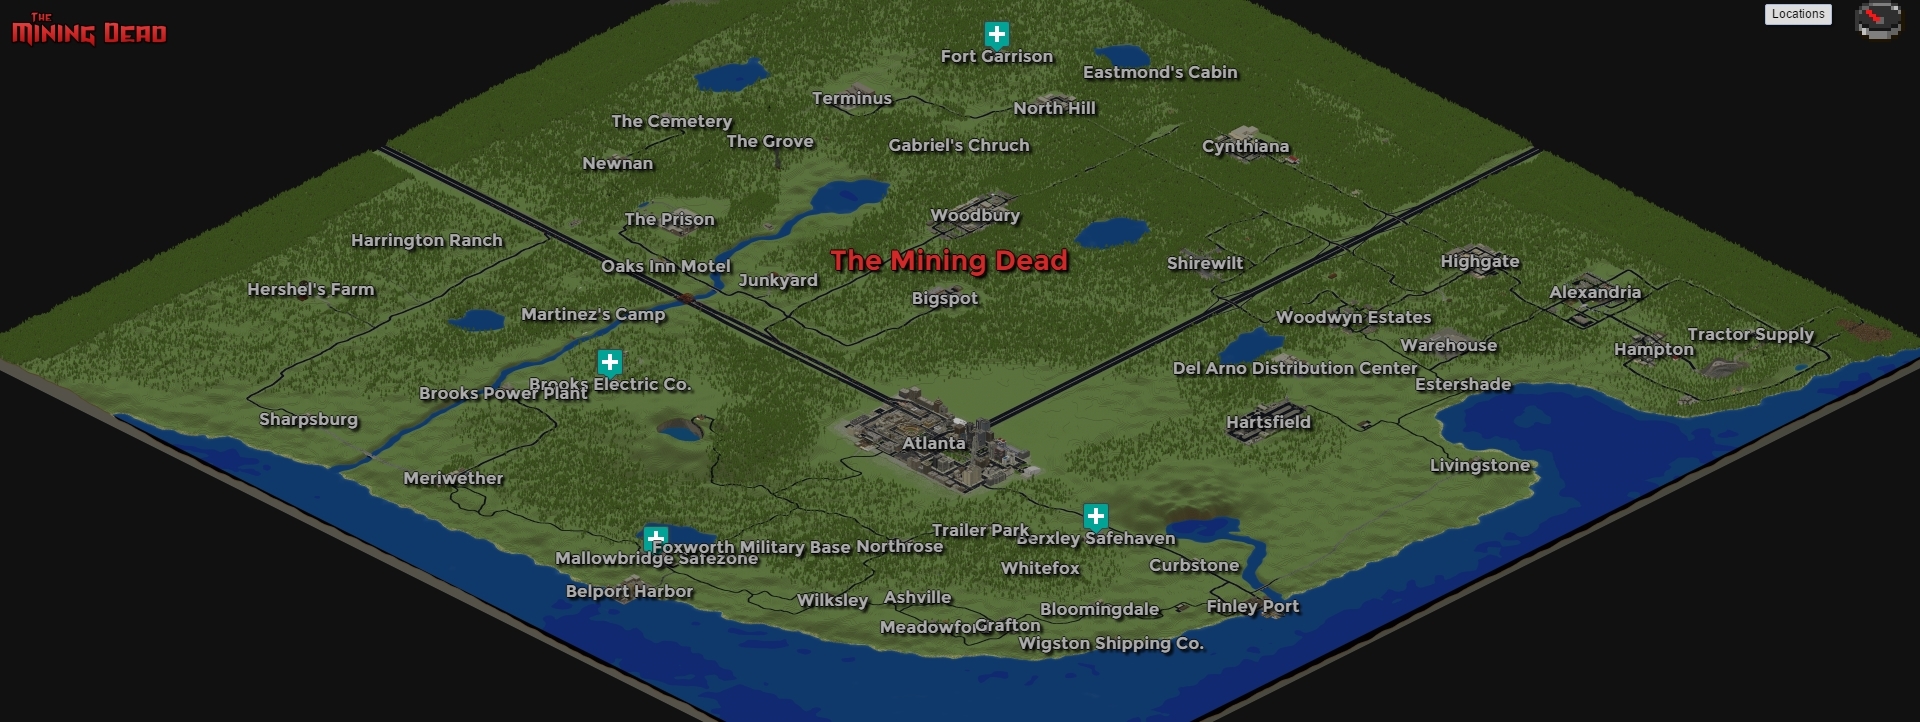 atlanta crafting dead map download